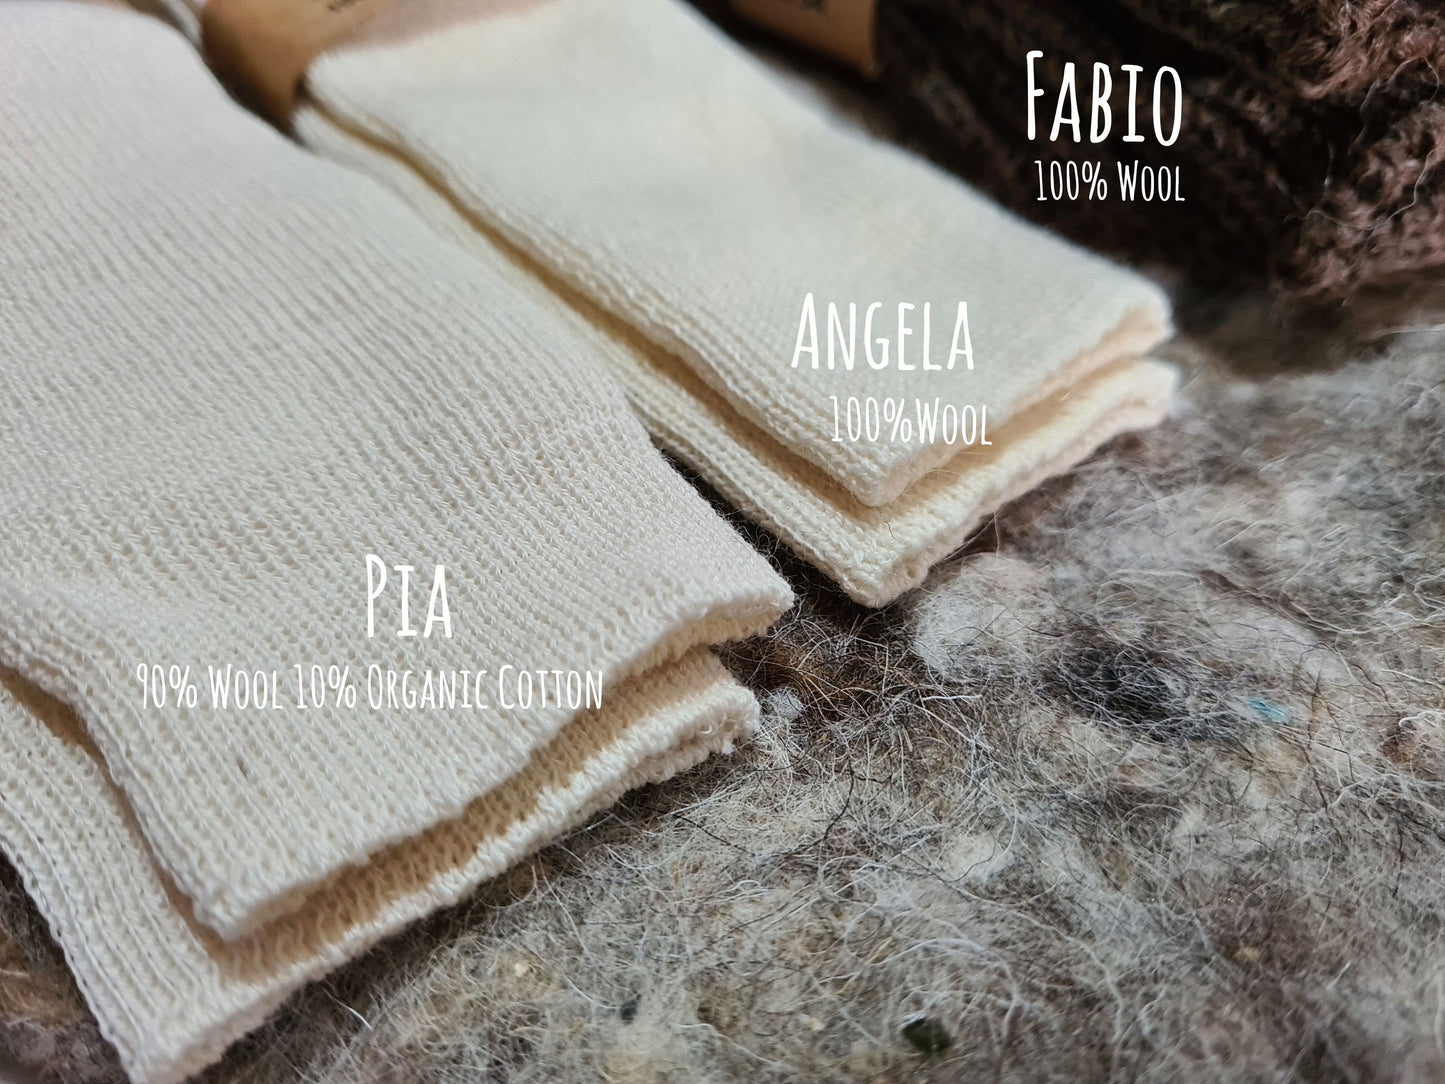 Pia (90% wool/10% organic cotton)